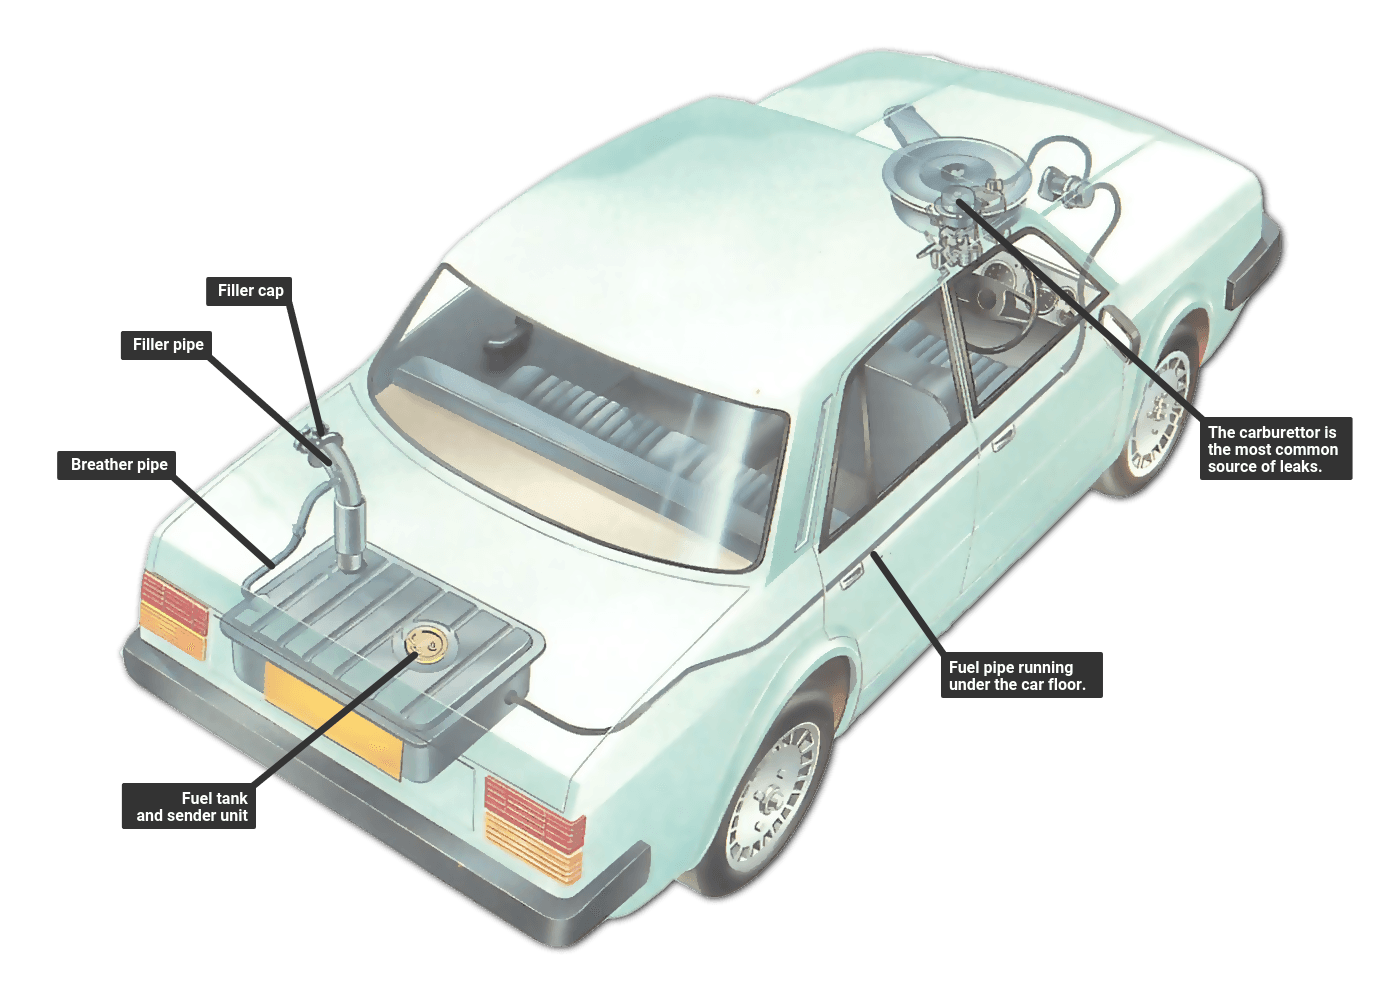 https://www.howacarworks.com/illustration/859/a-typical-fuel-system.png